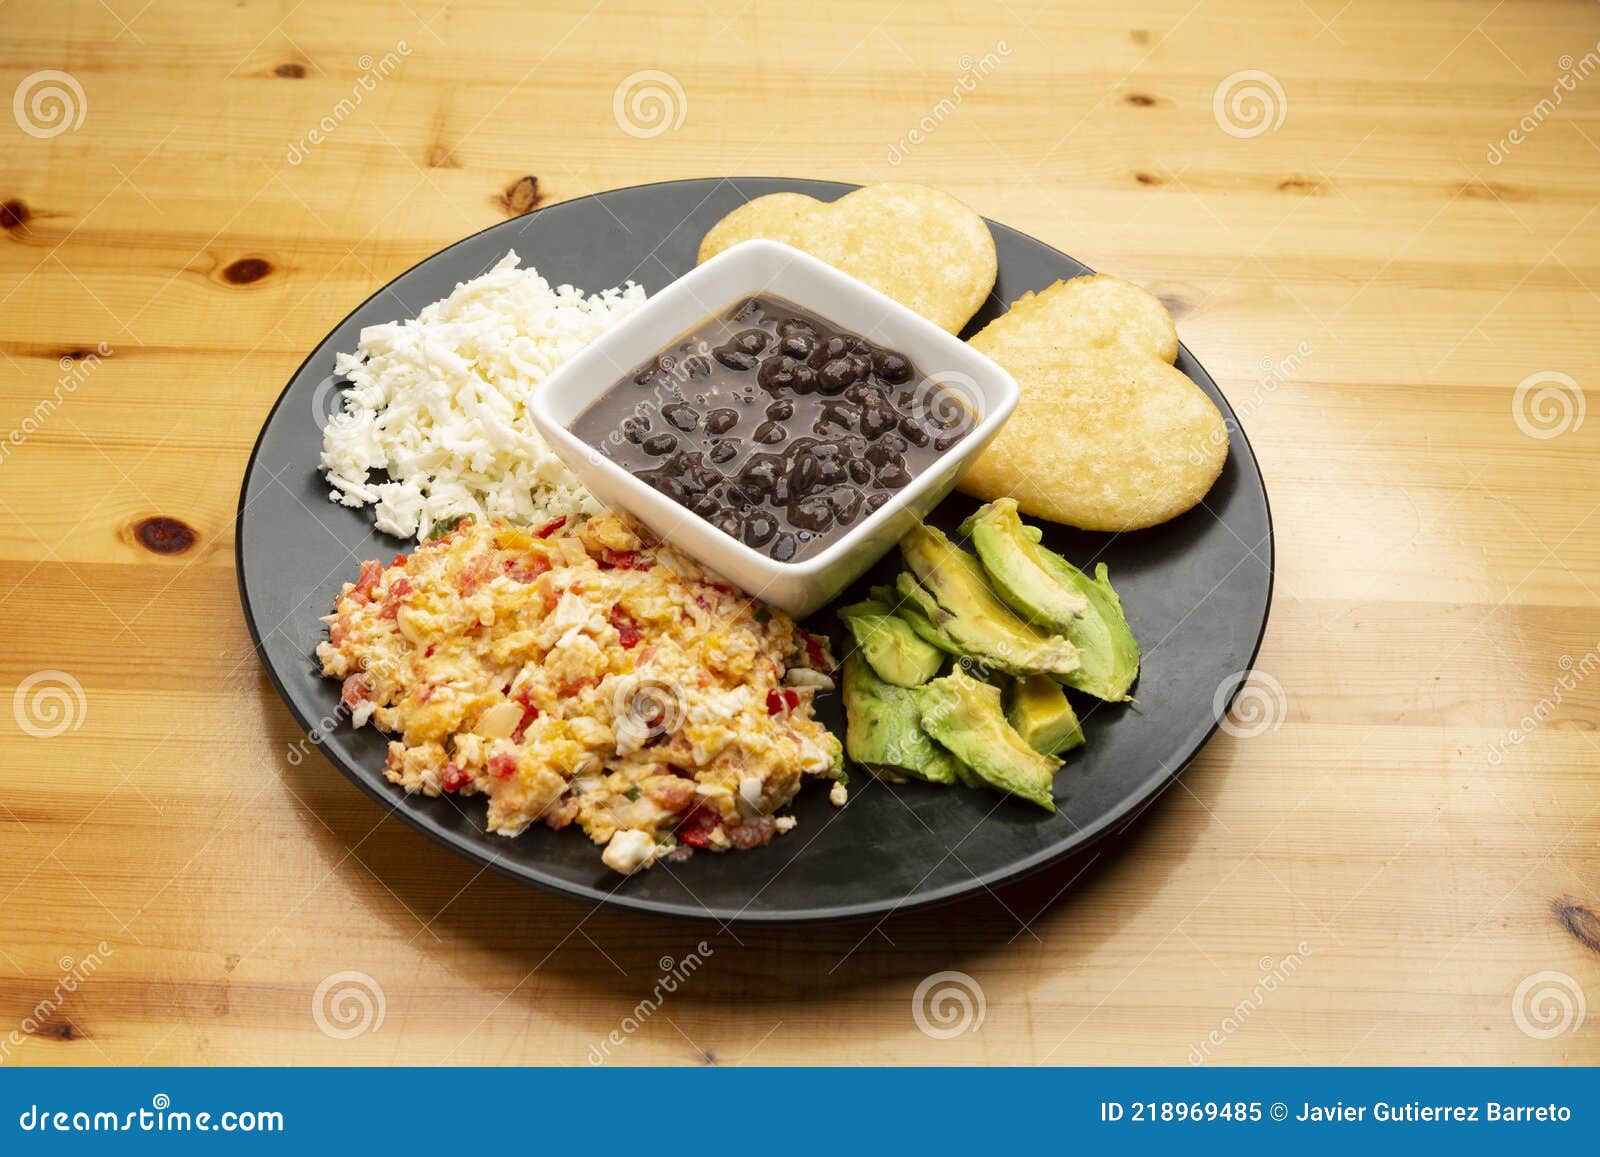 venezuelan breakfast scrambled eggs with tomato called perico, black beans, hard white cheese, arepas and avocado